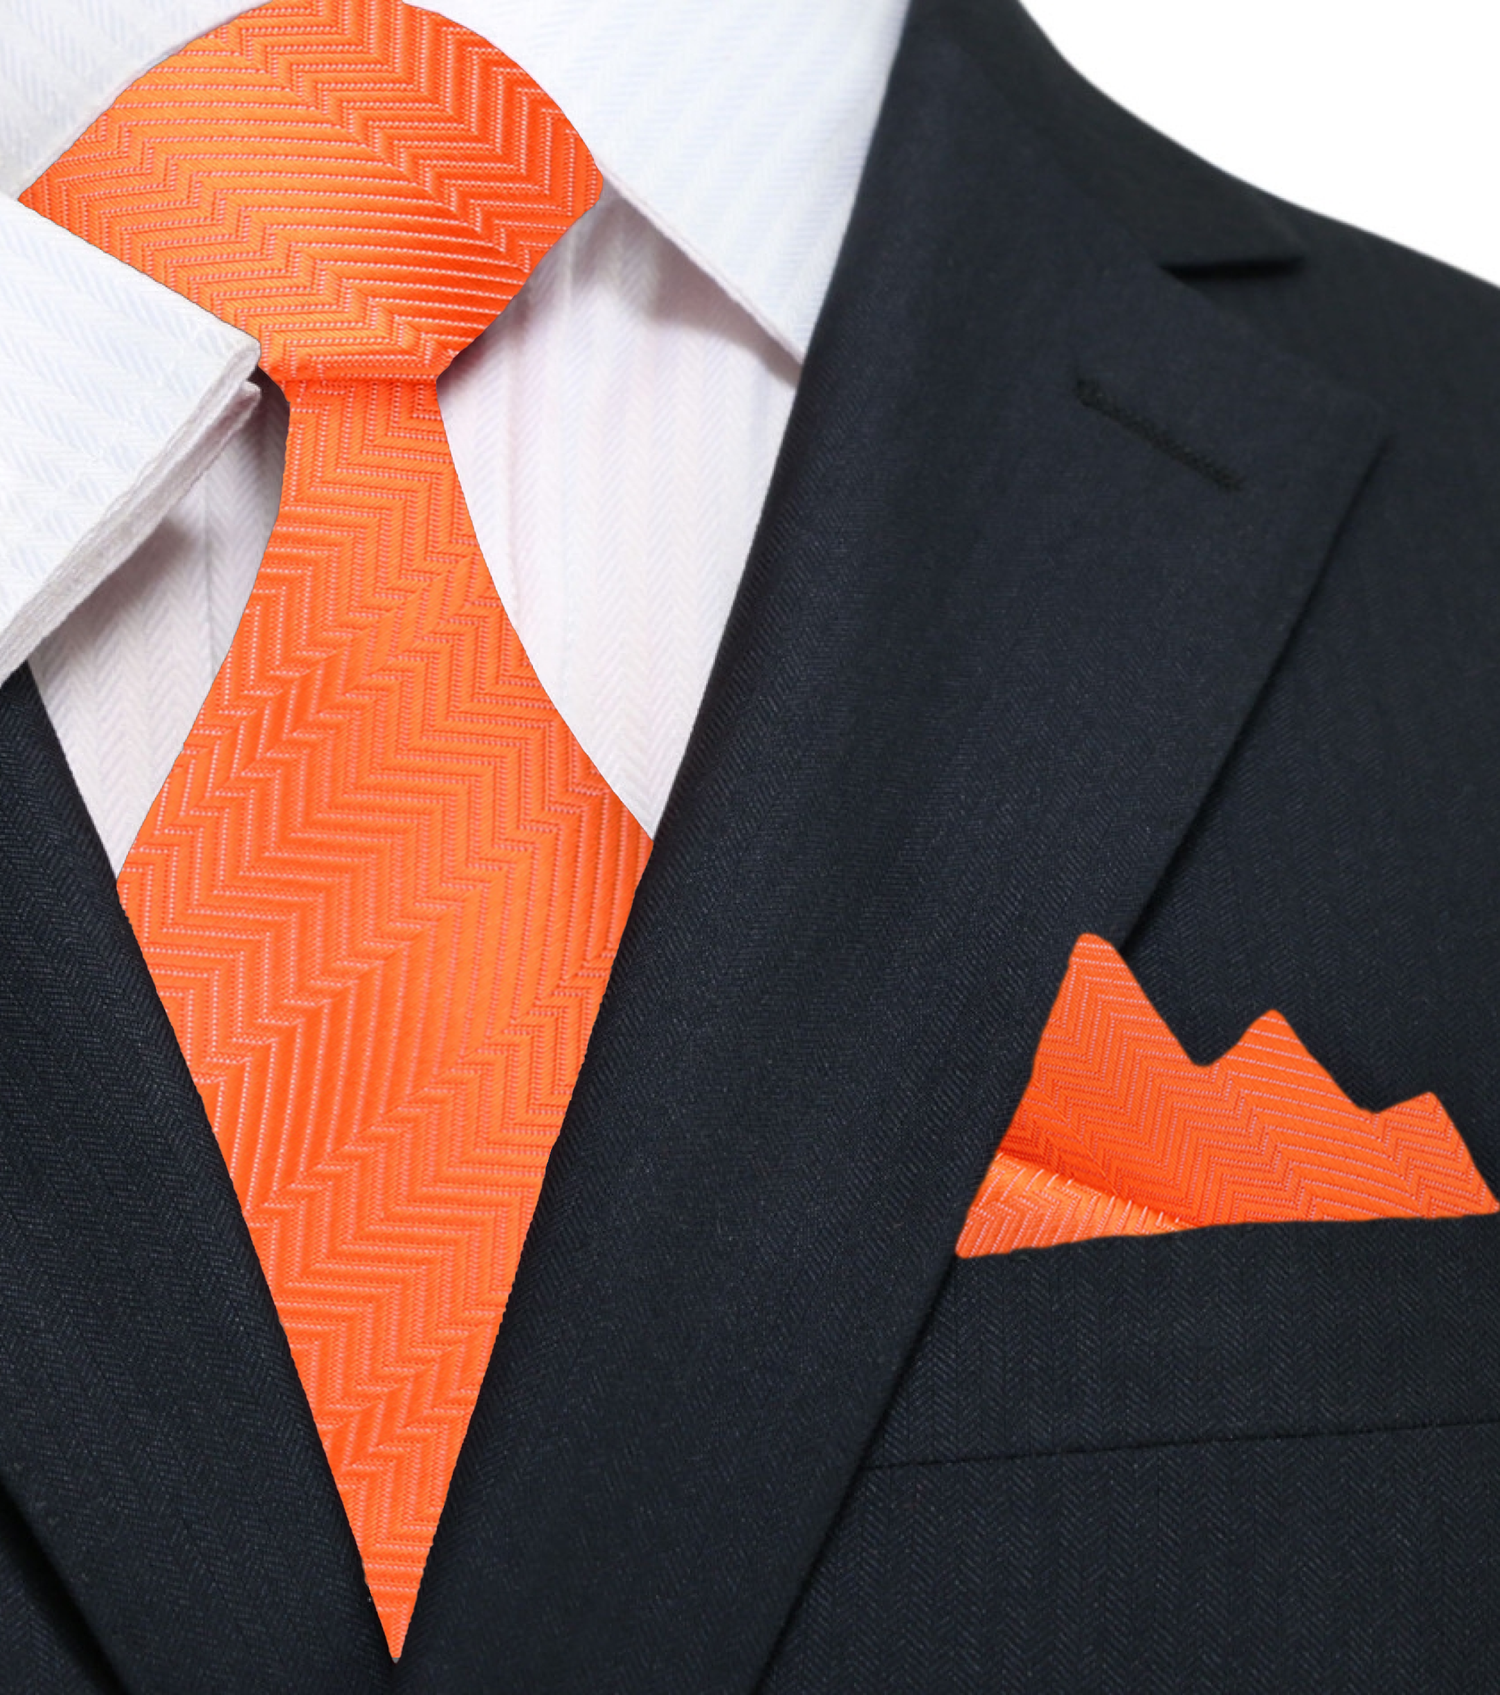 solid orange tie and pocket square